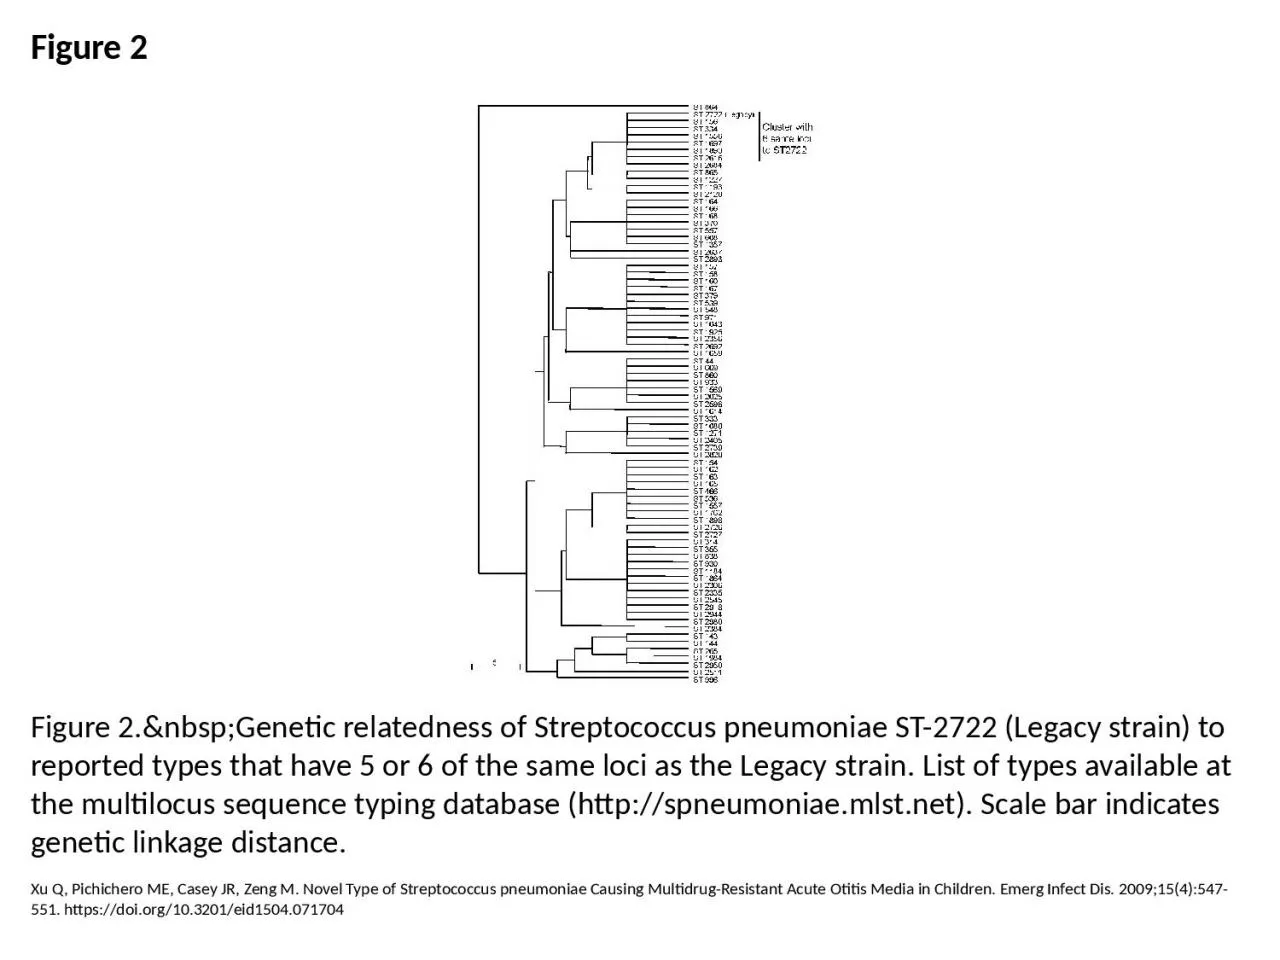 Figure 2 Figure 2.&nbsp;Genetic relatedness of Streptococcus pneumoniae ST-2722 (Legacy